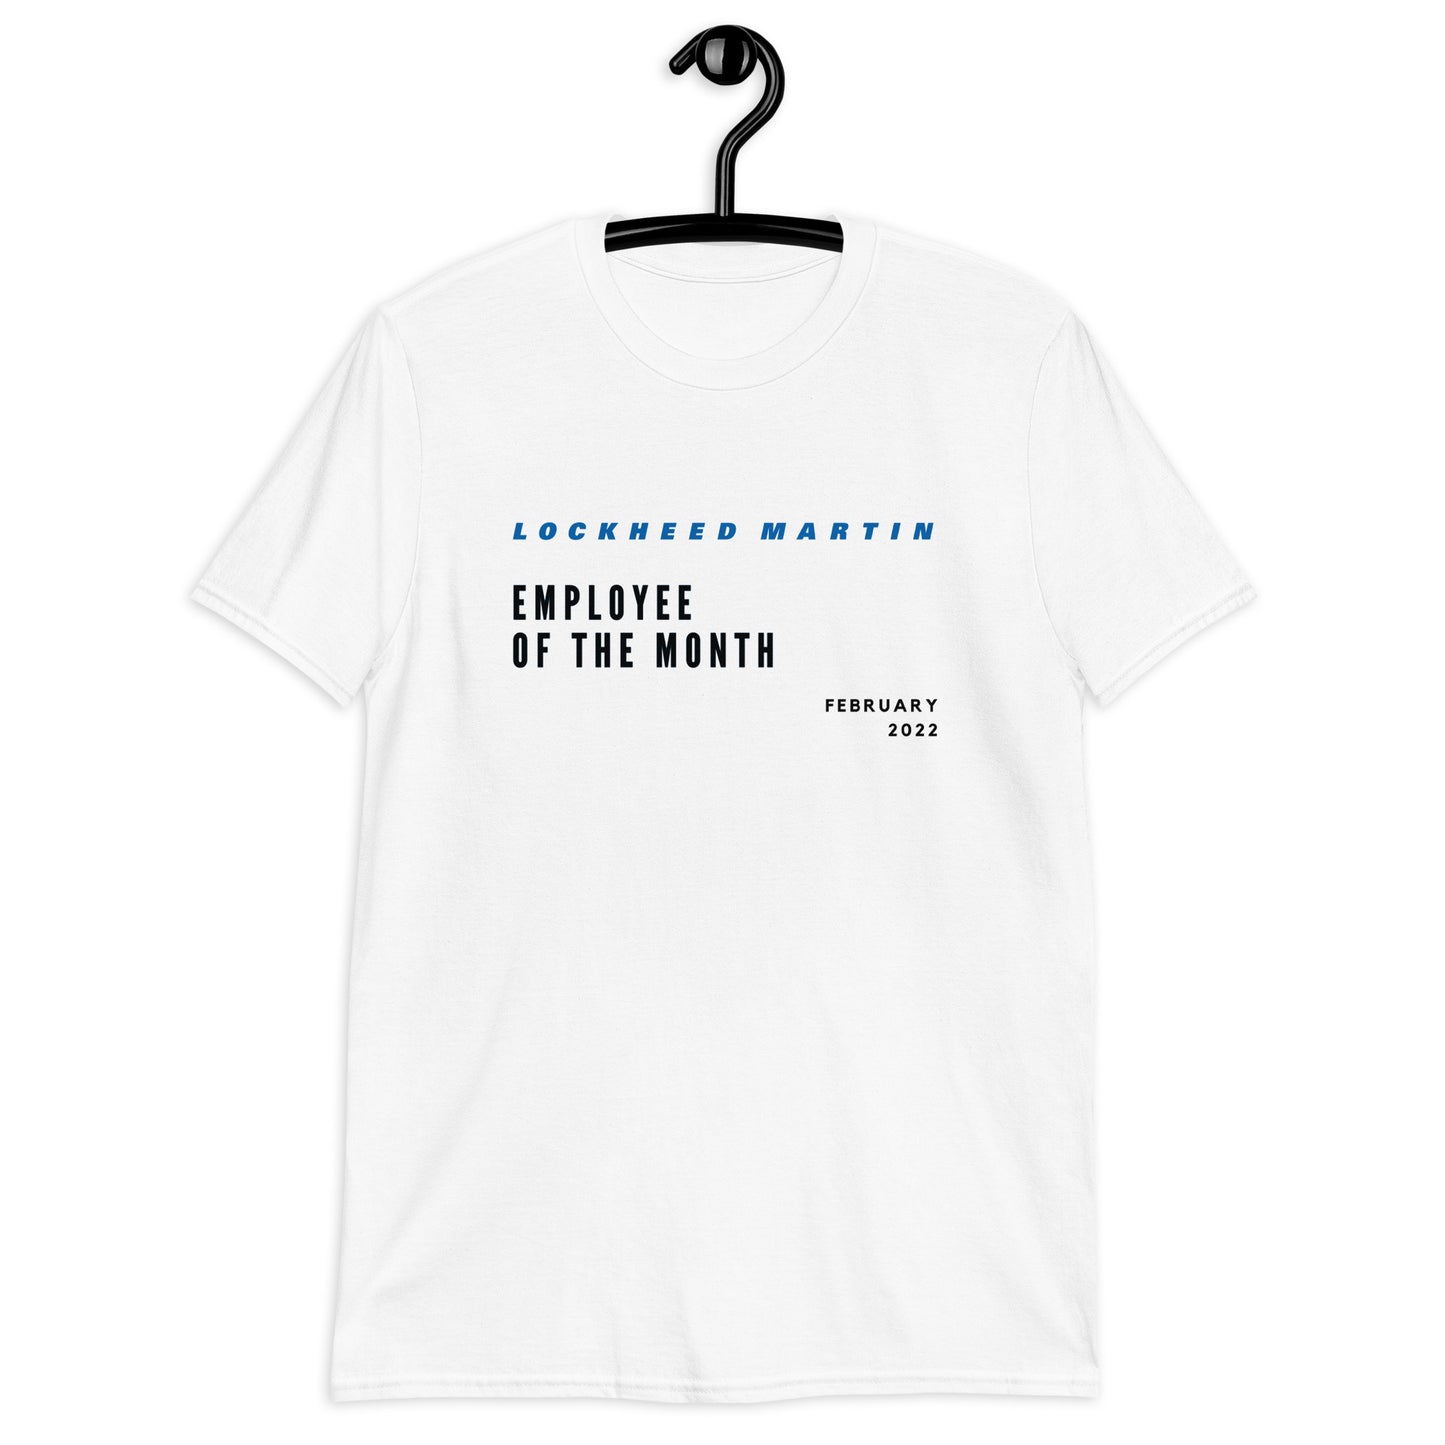 Lockheed Martin Employee of the Month T-Shirt